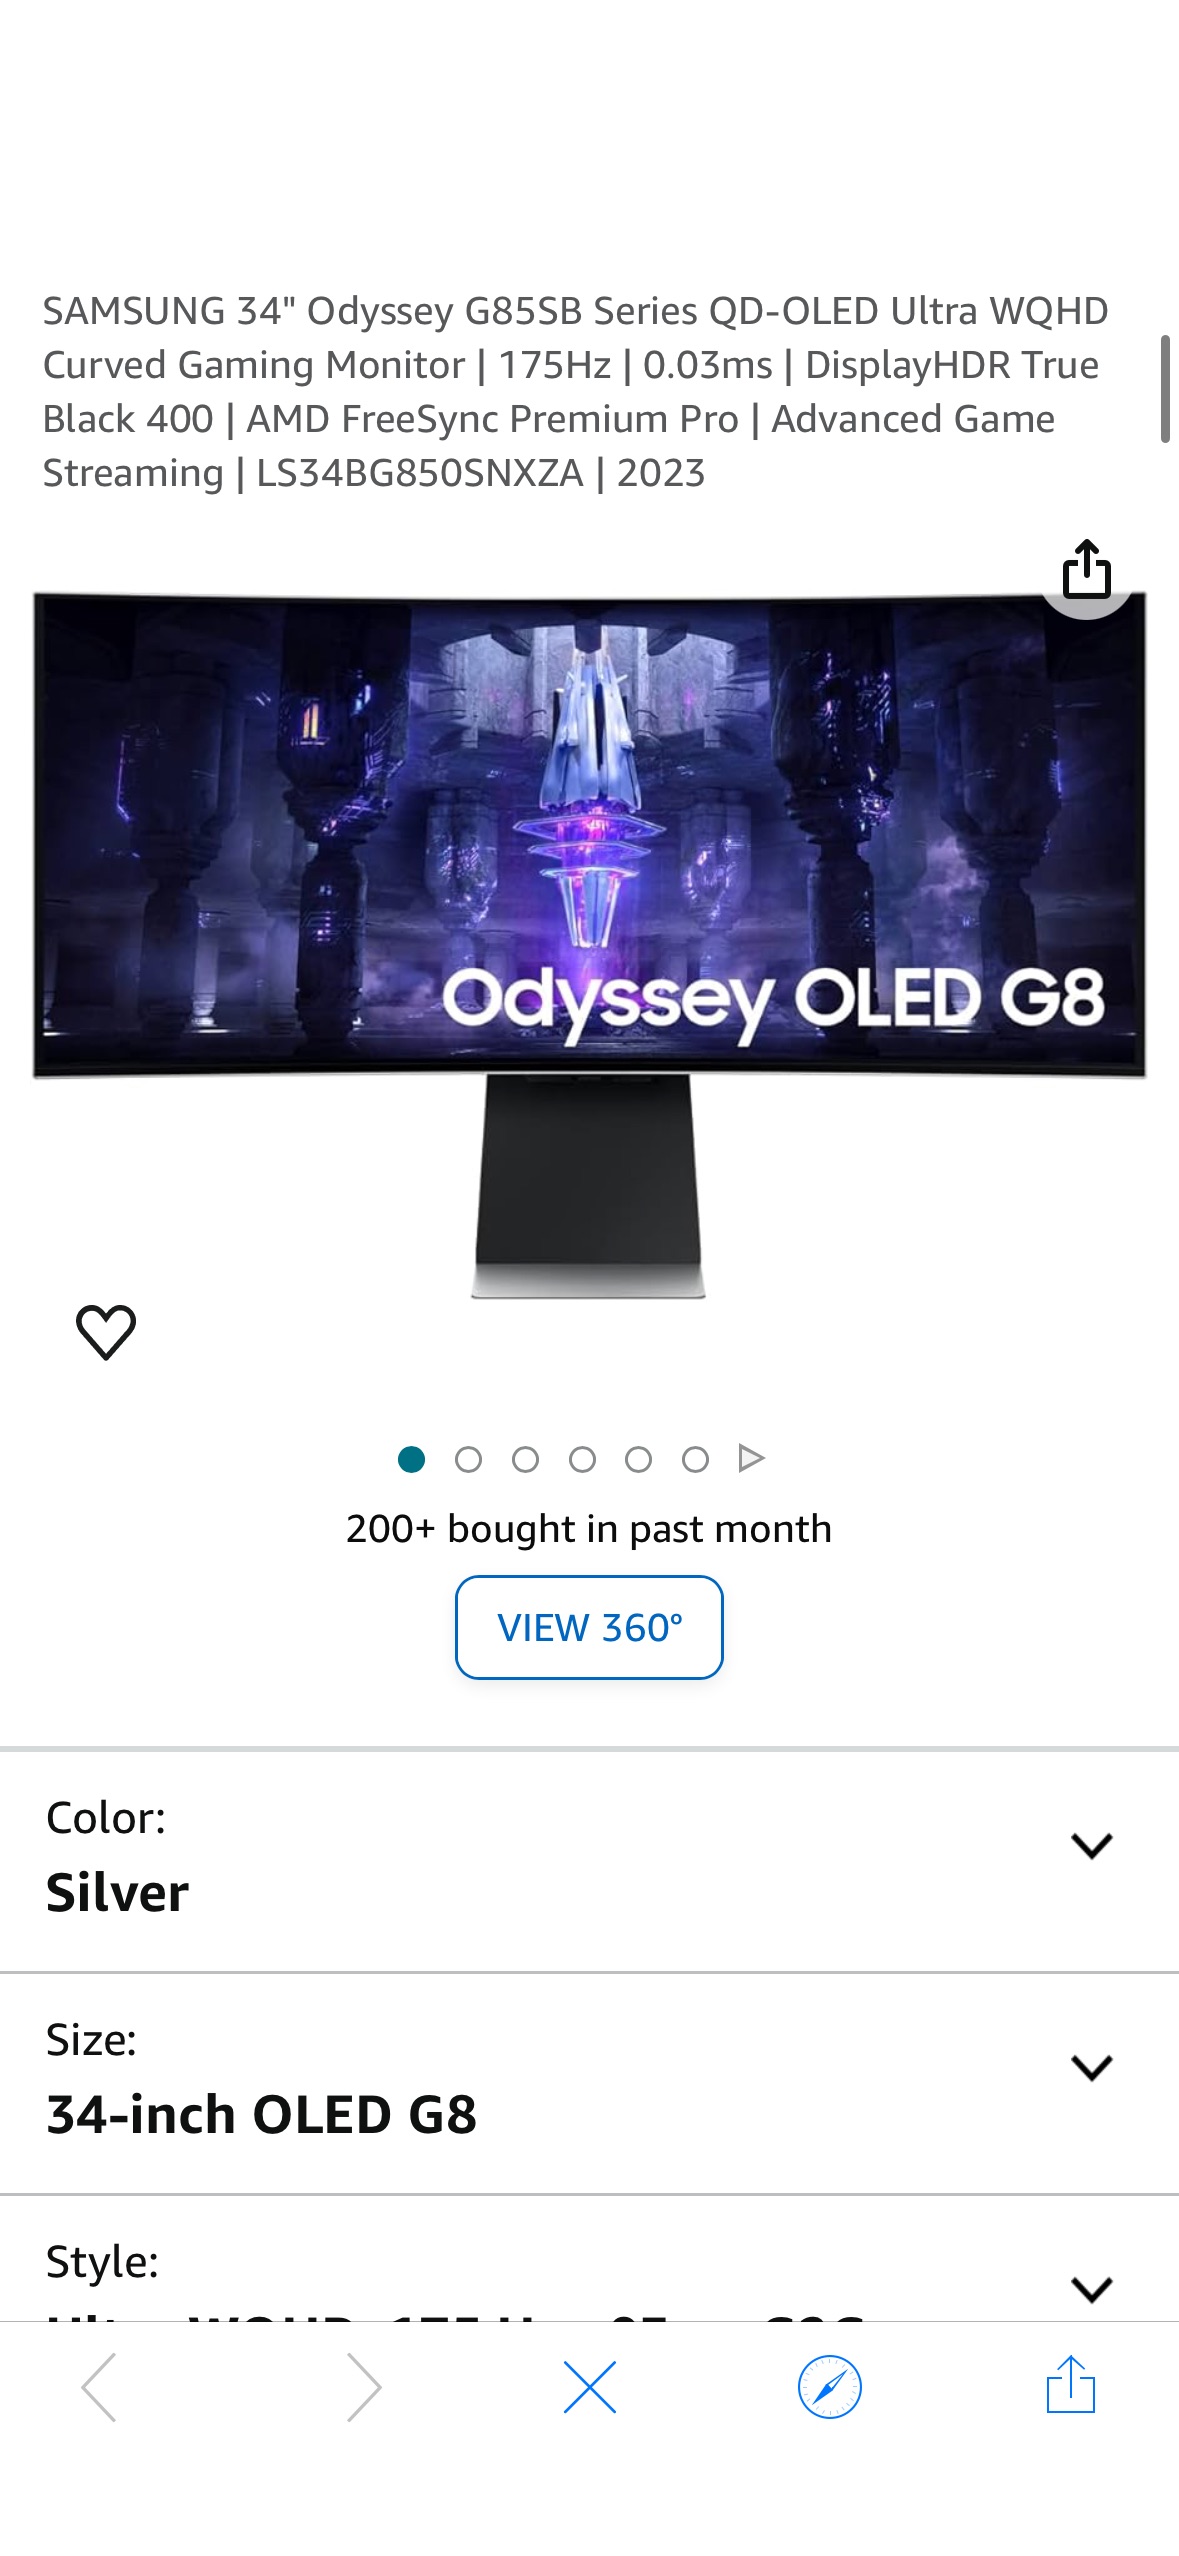 Amazon.com: SAMSUNG 34" Odyssey G85SB Series QD-OLED Ultra WQHD Curved Gaming Monitor,